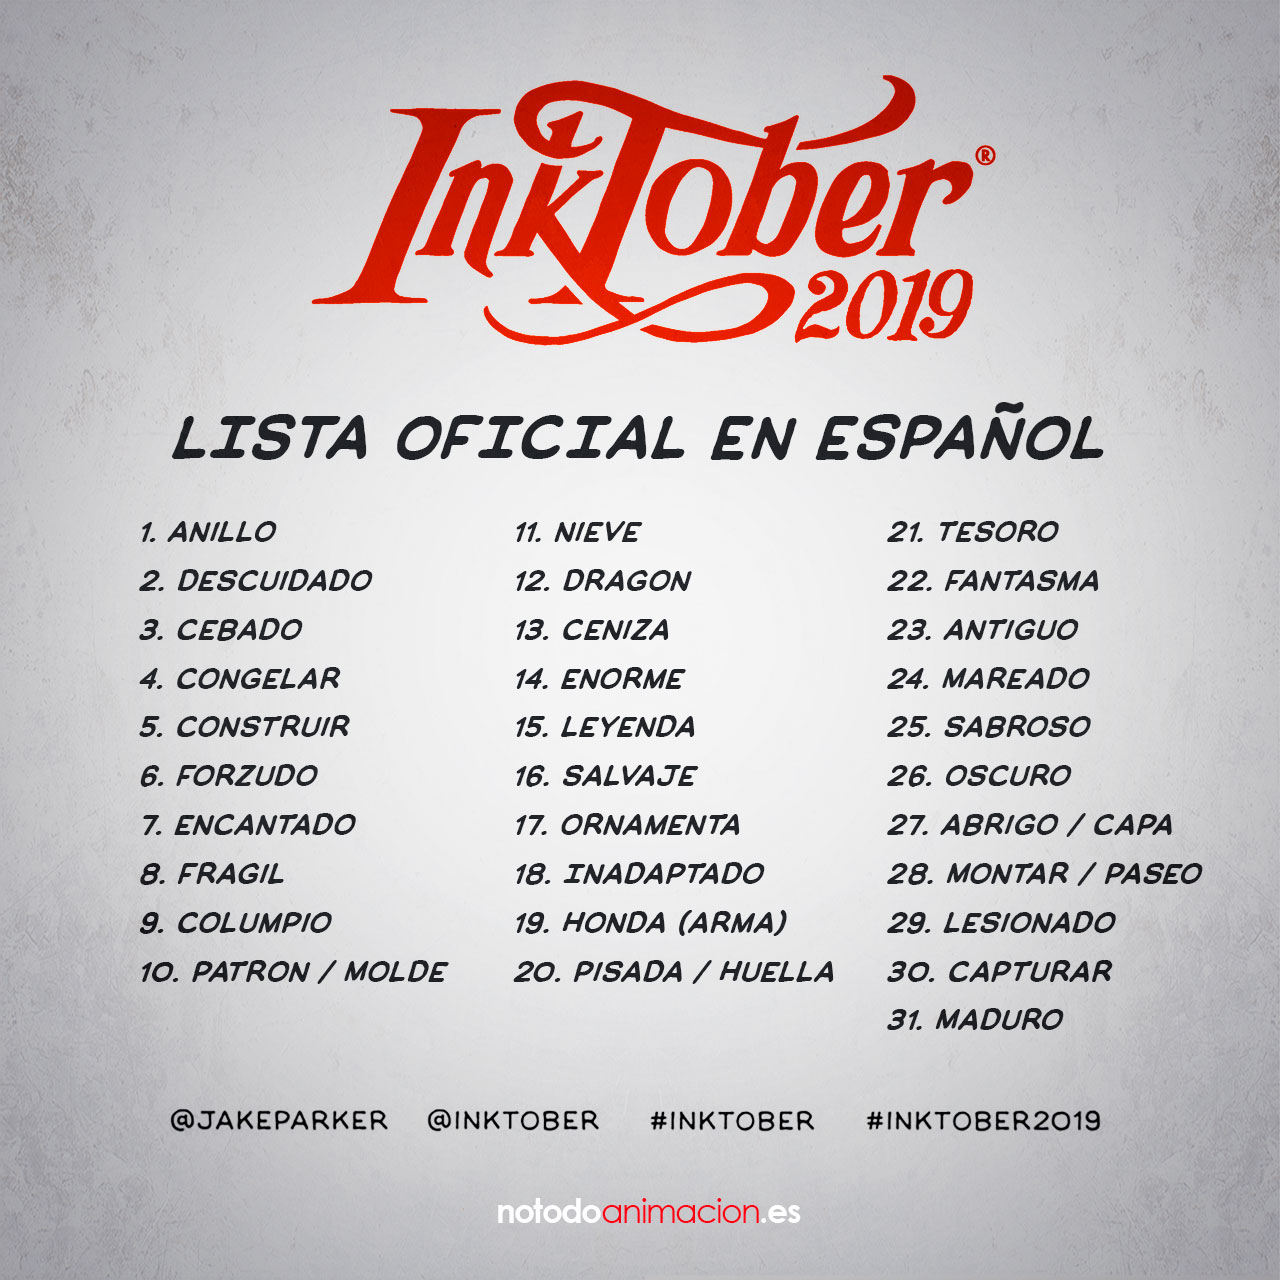 inktober 2019 en español